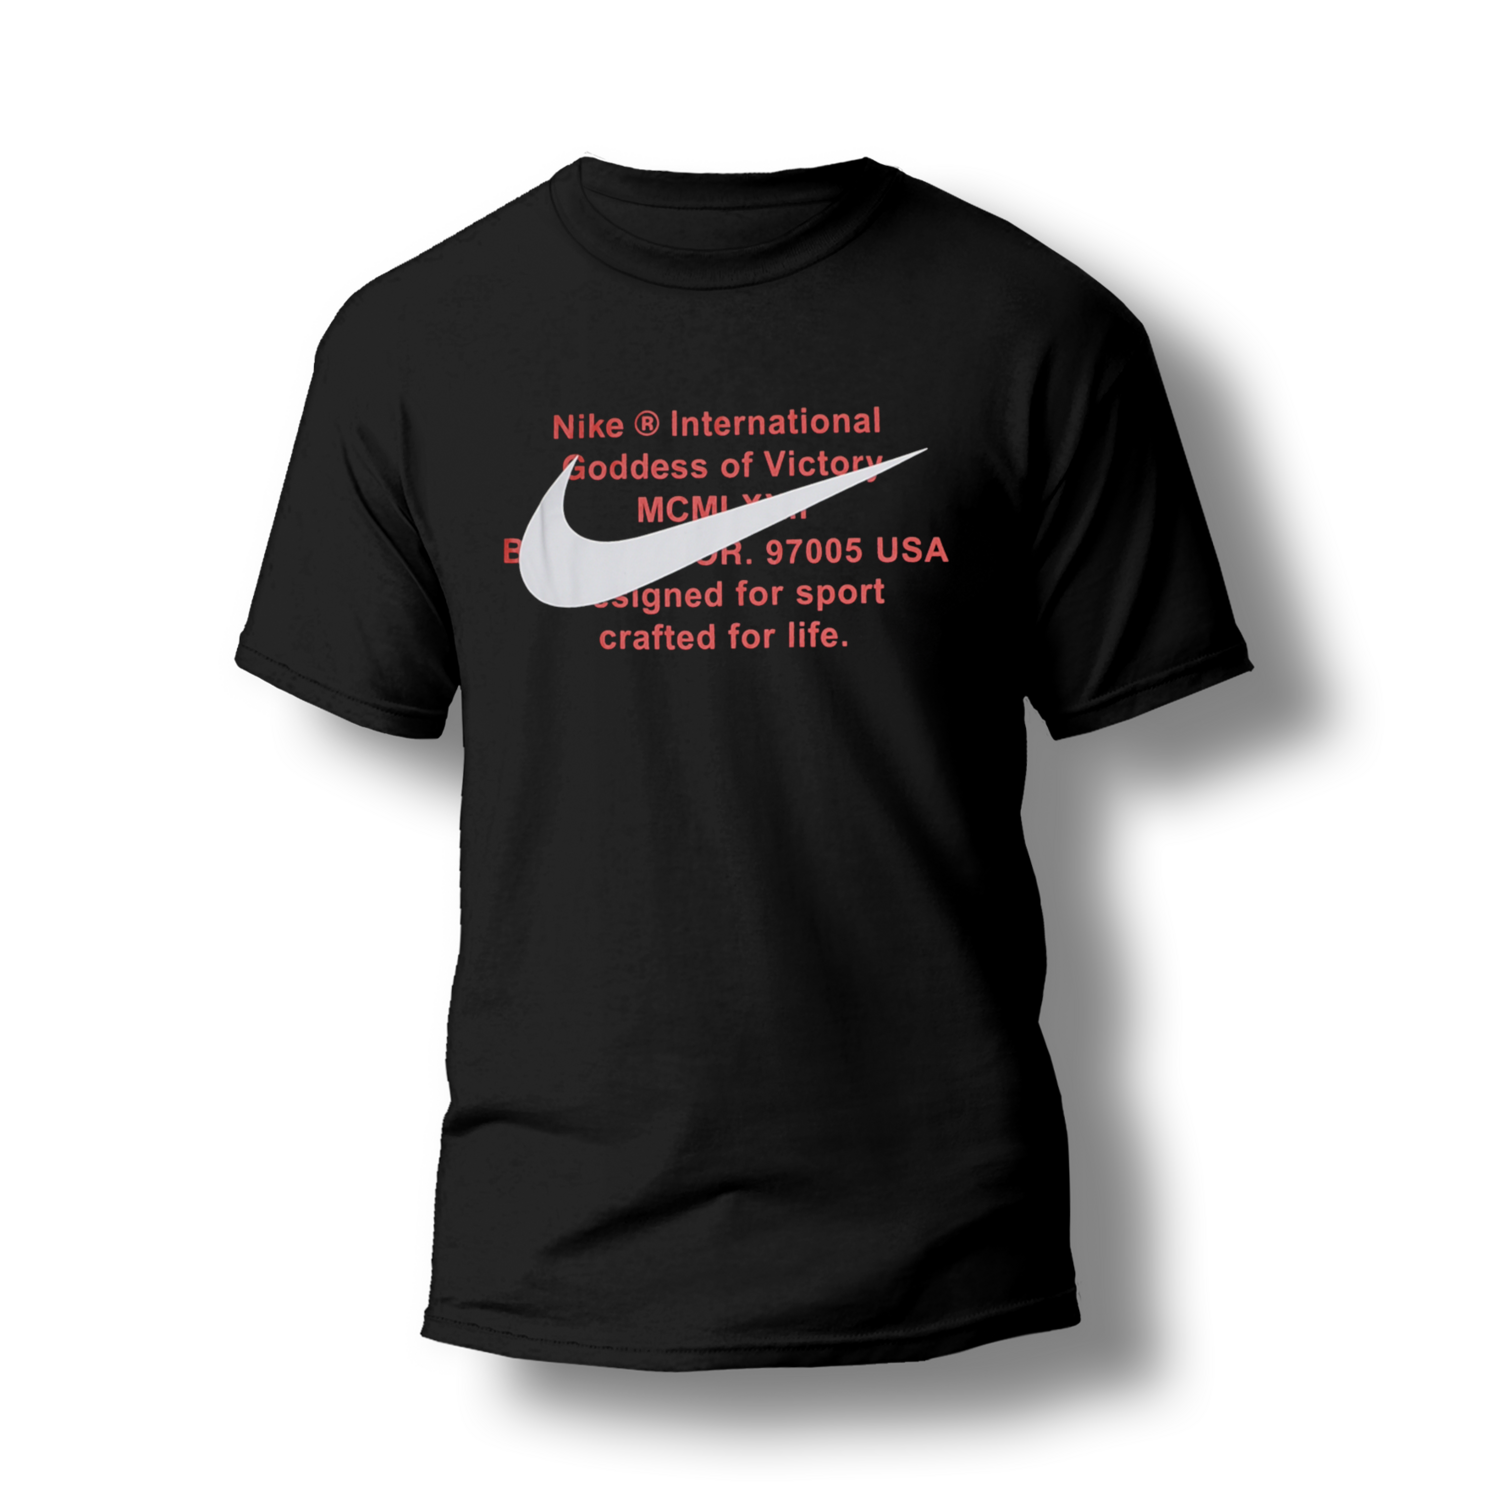 Nike International Goddess of Victory t-shirt